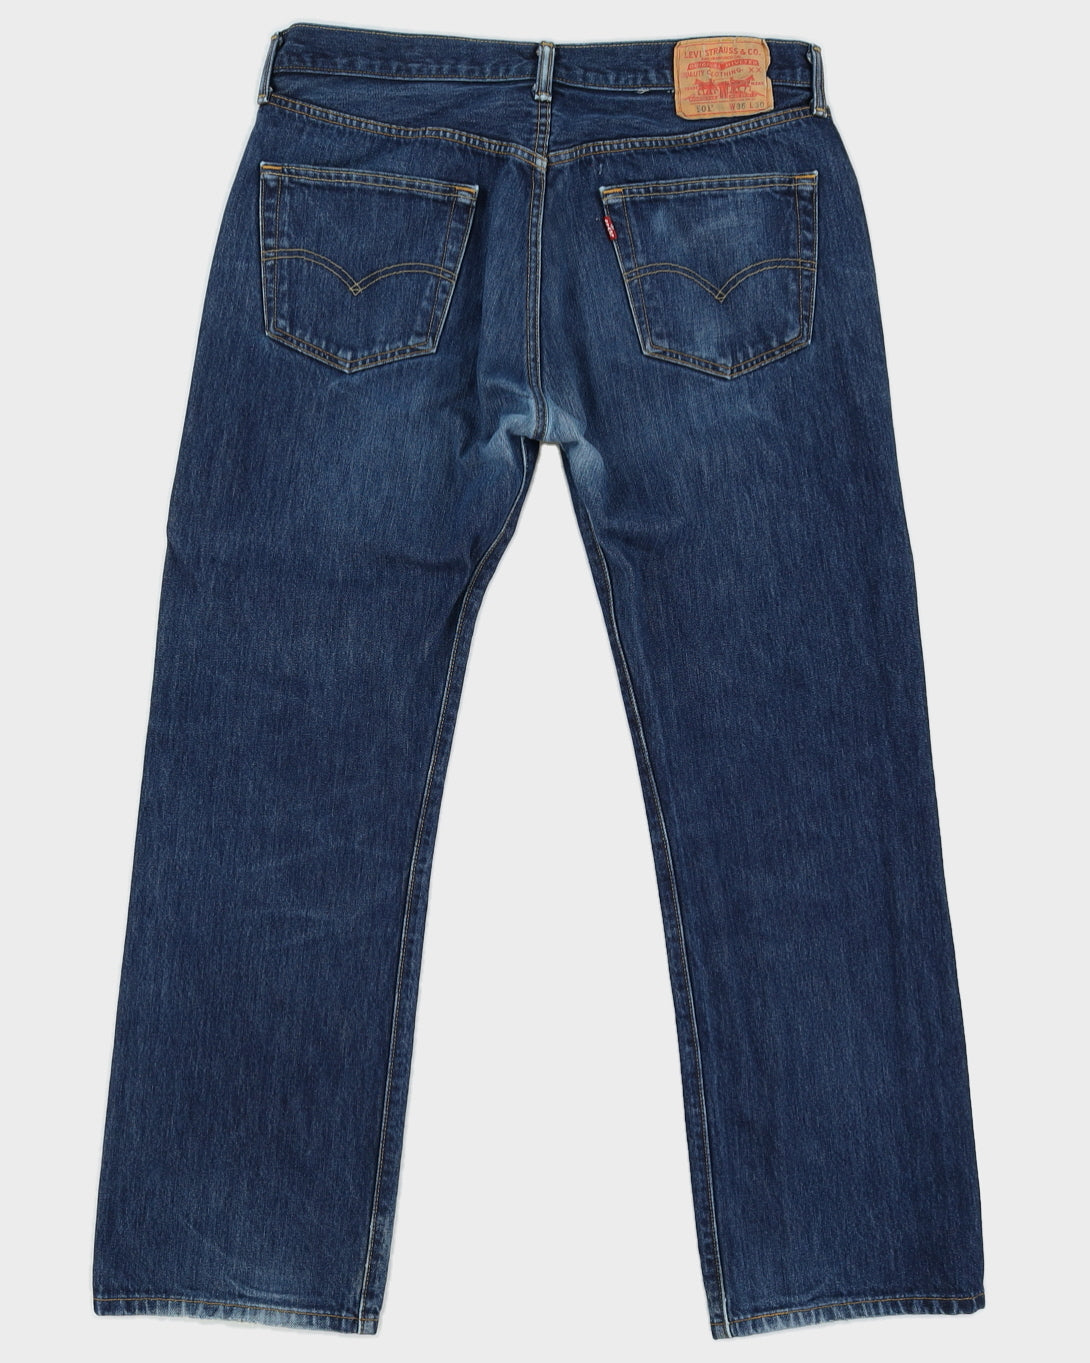 Levi's 501 Blue Medium Washed Jeans - W36 L30